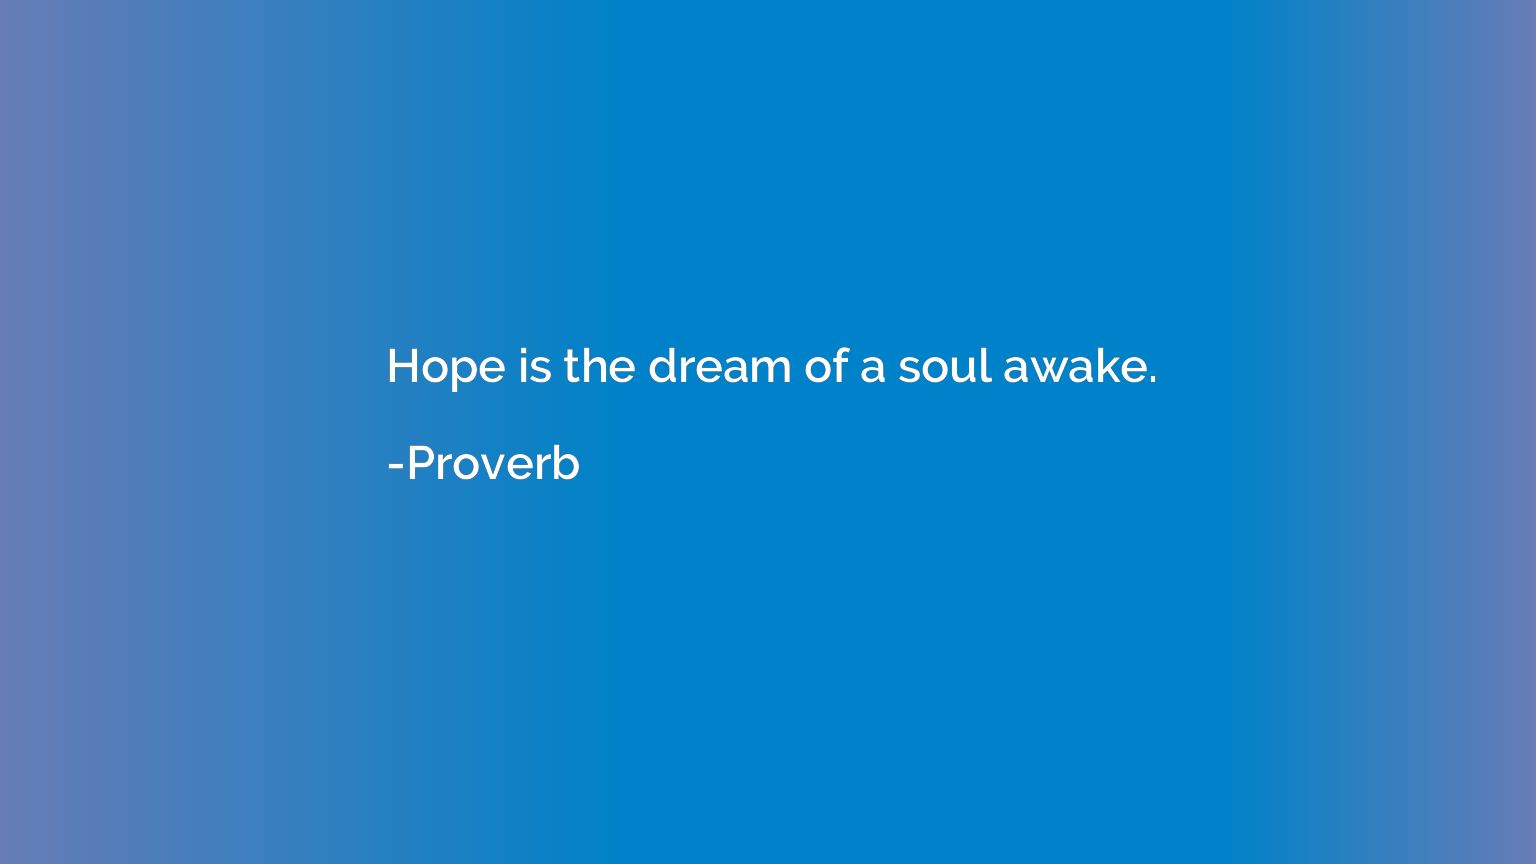 Hope is the dream of a soul awake.